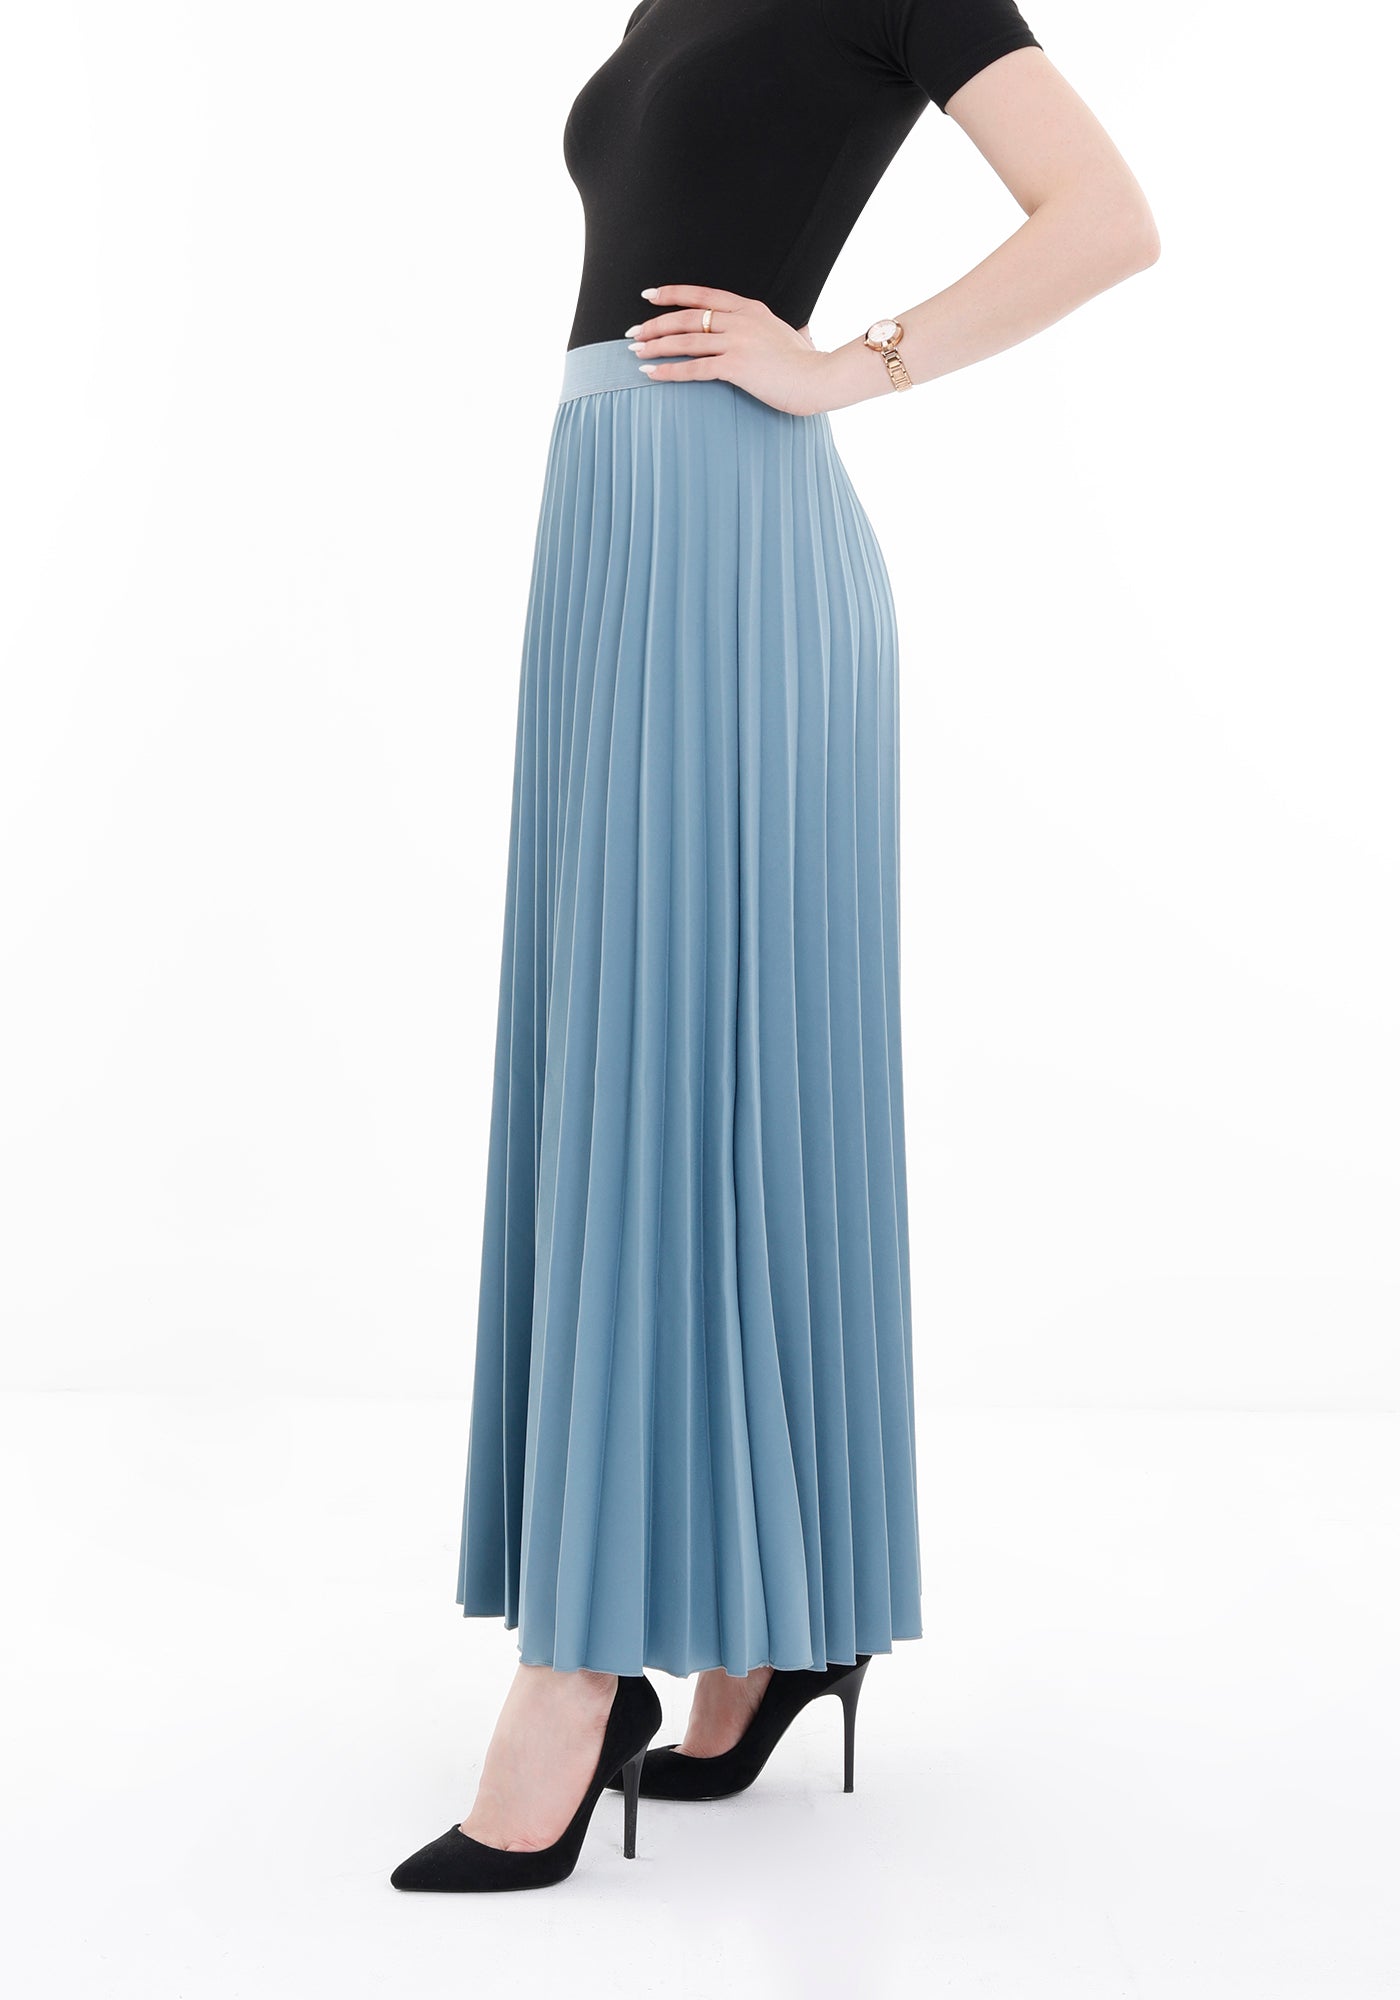 Petrol Pleated Maxi Skirt Elastic Waist Band Ankle Length Plisse Skirt G-Line